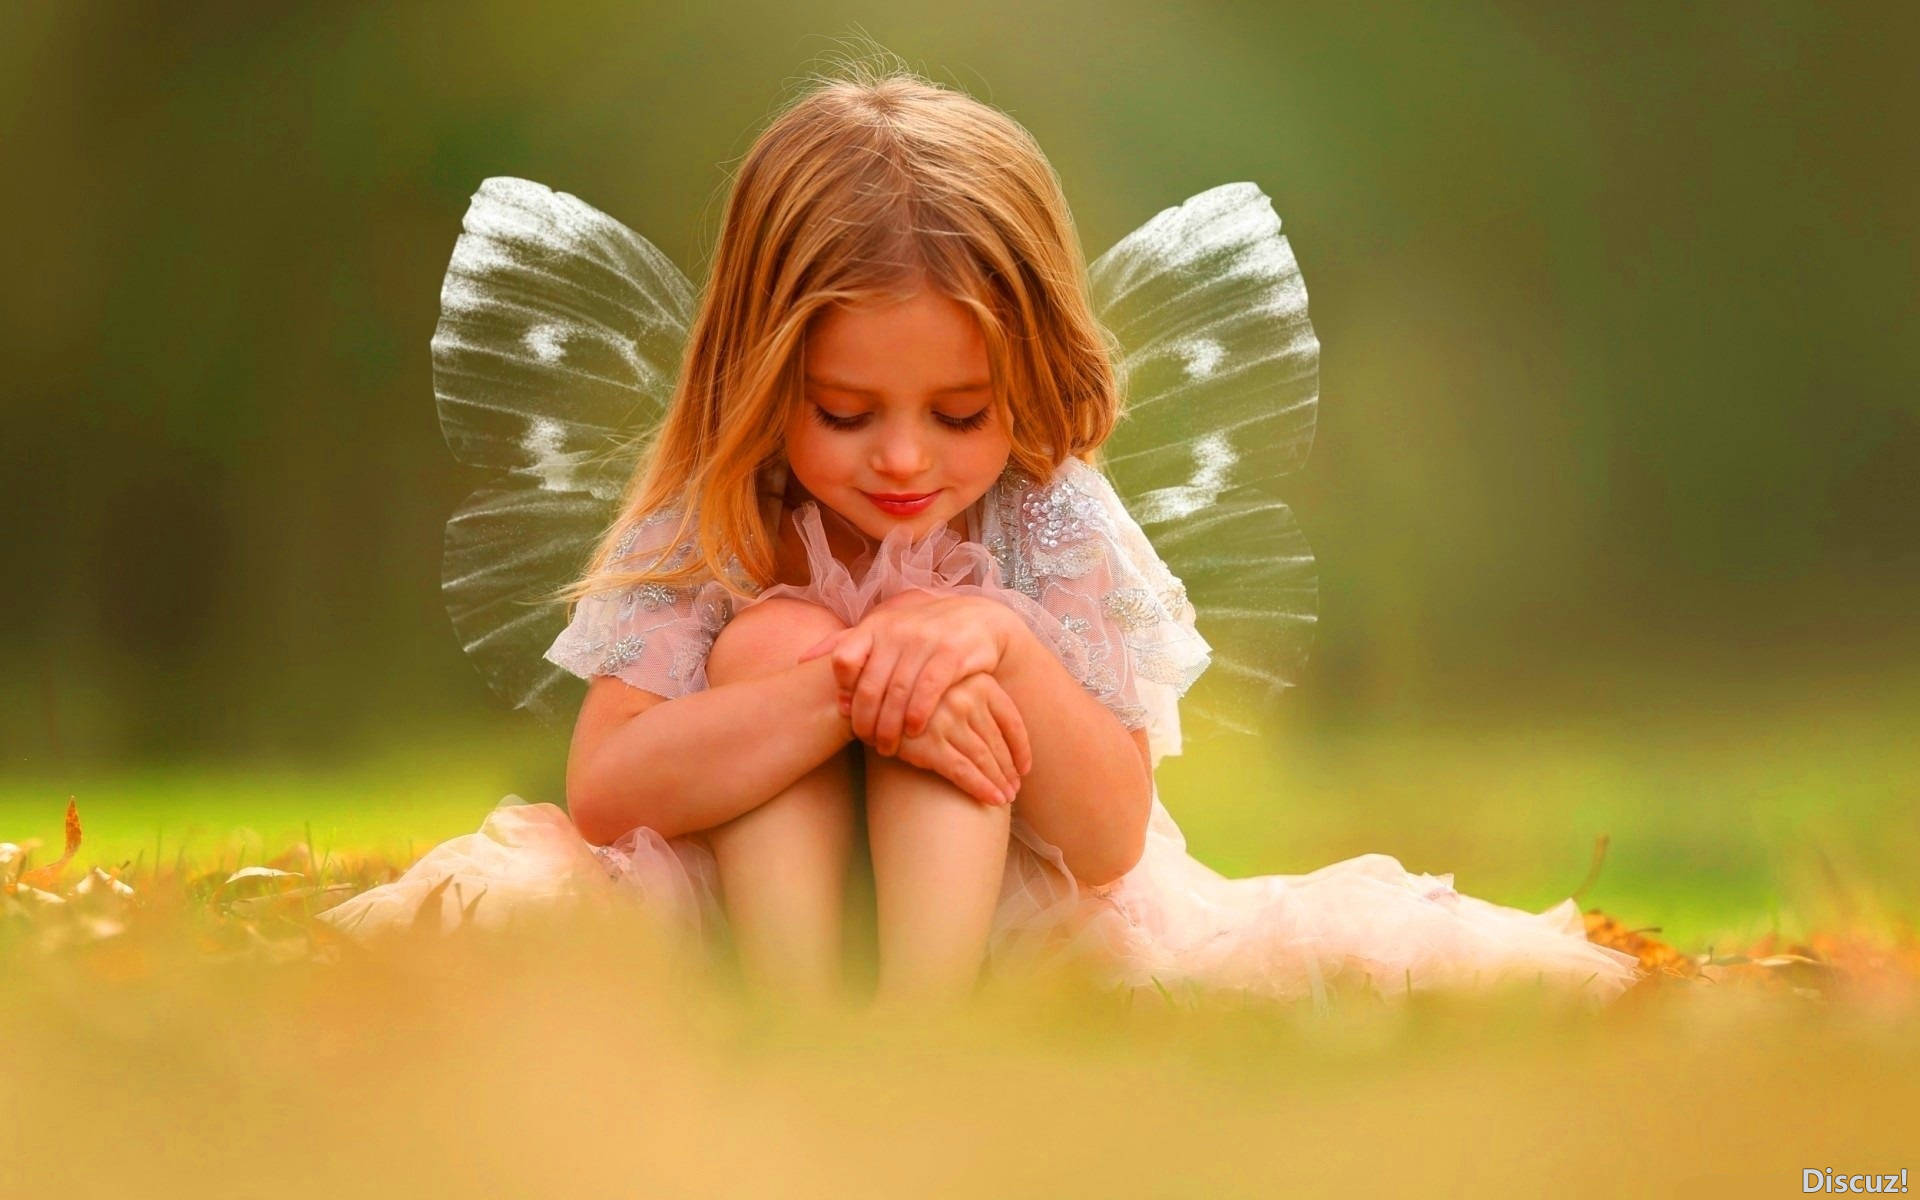 cute-baby-girl-butterfly-wings-4gmz8smau9thhui2.jpg